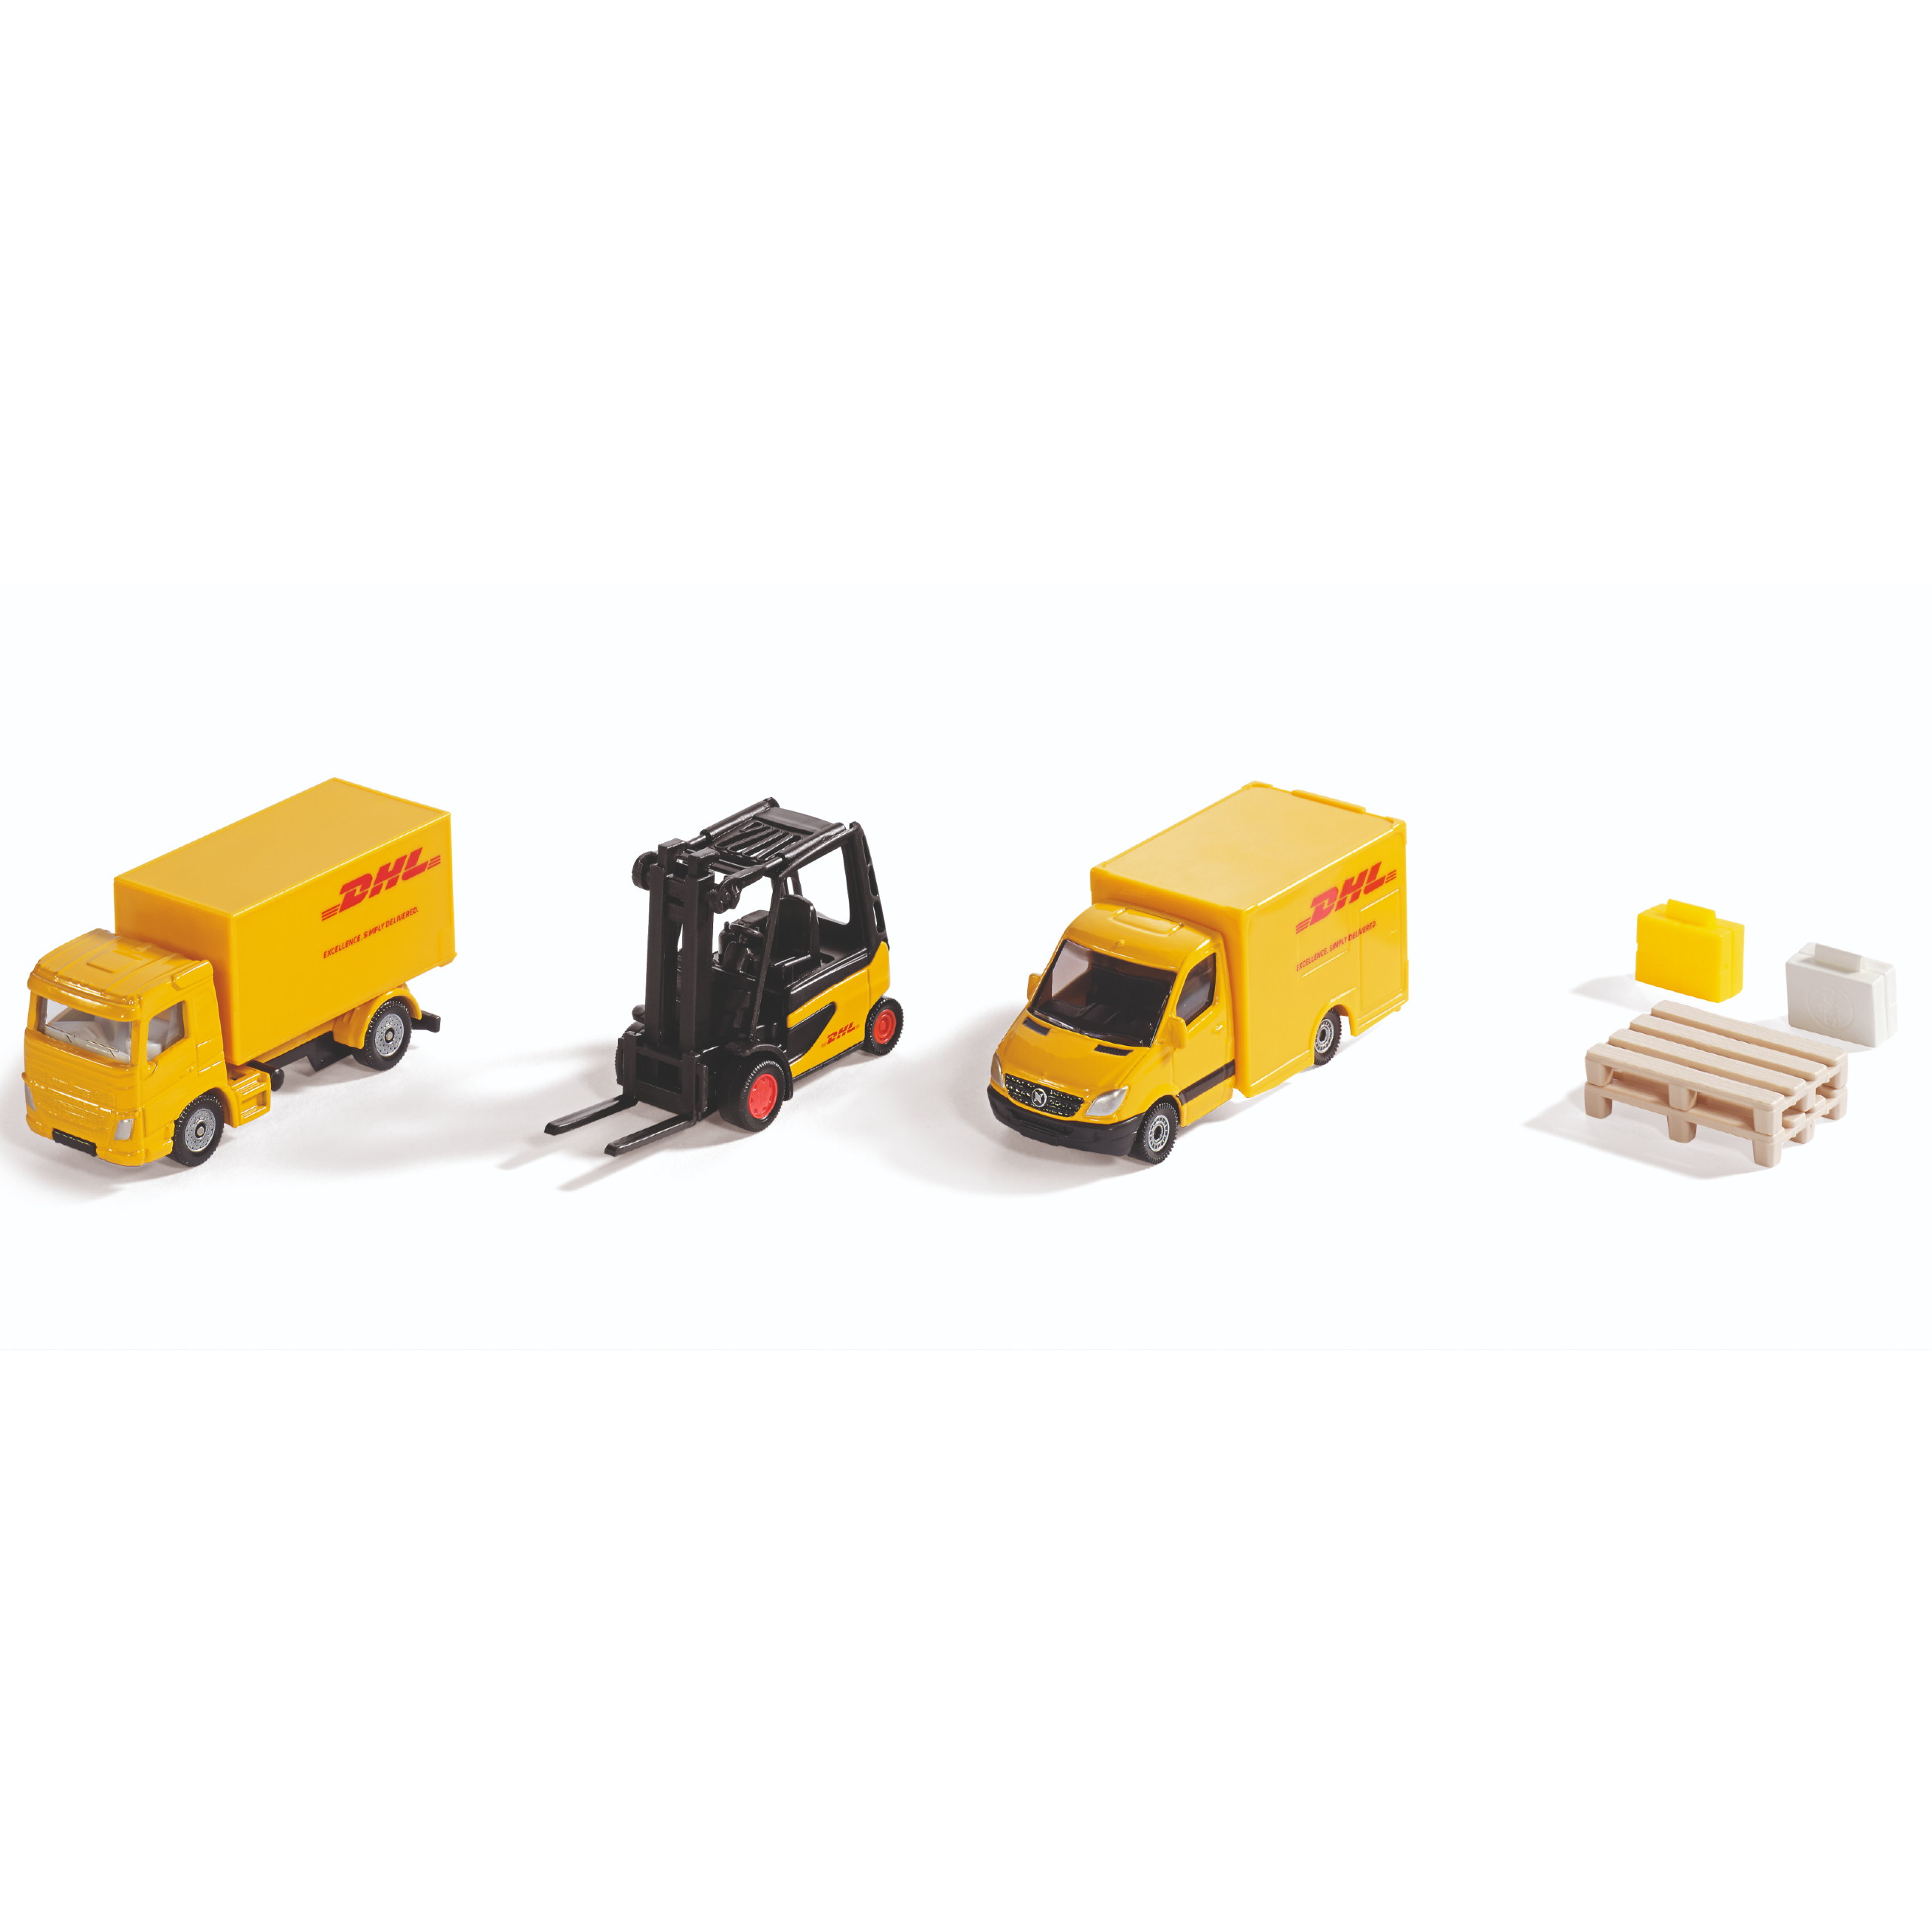 Work Vehicles siku toy car dhl logistics set